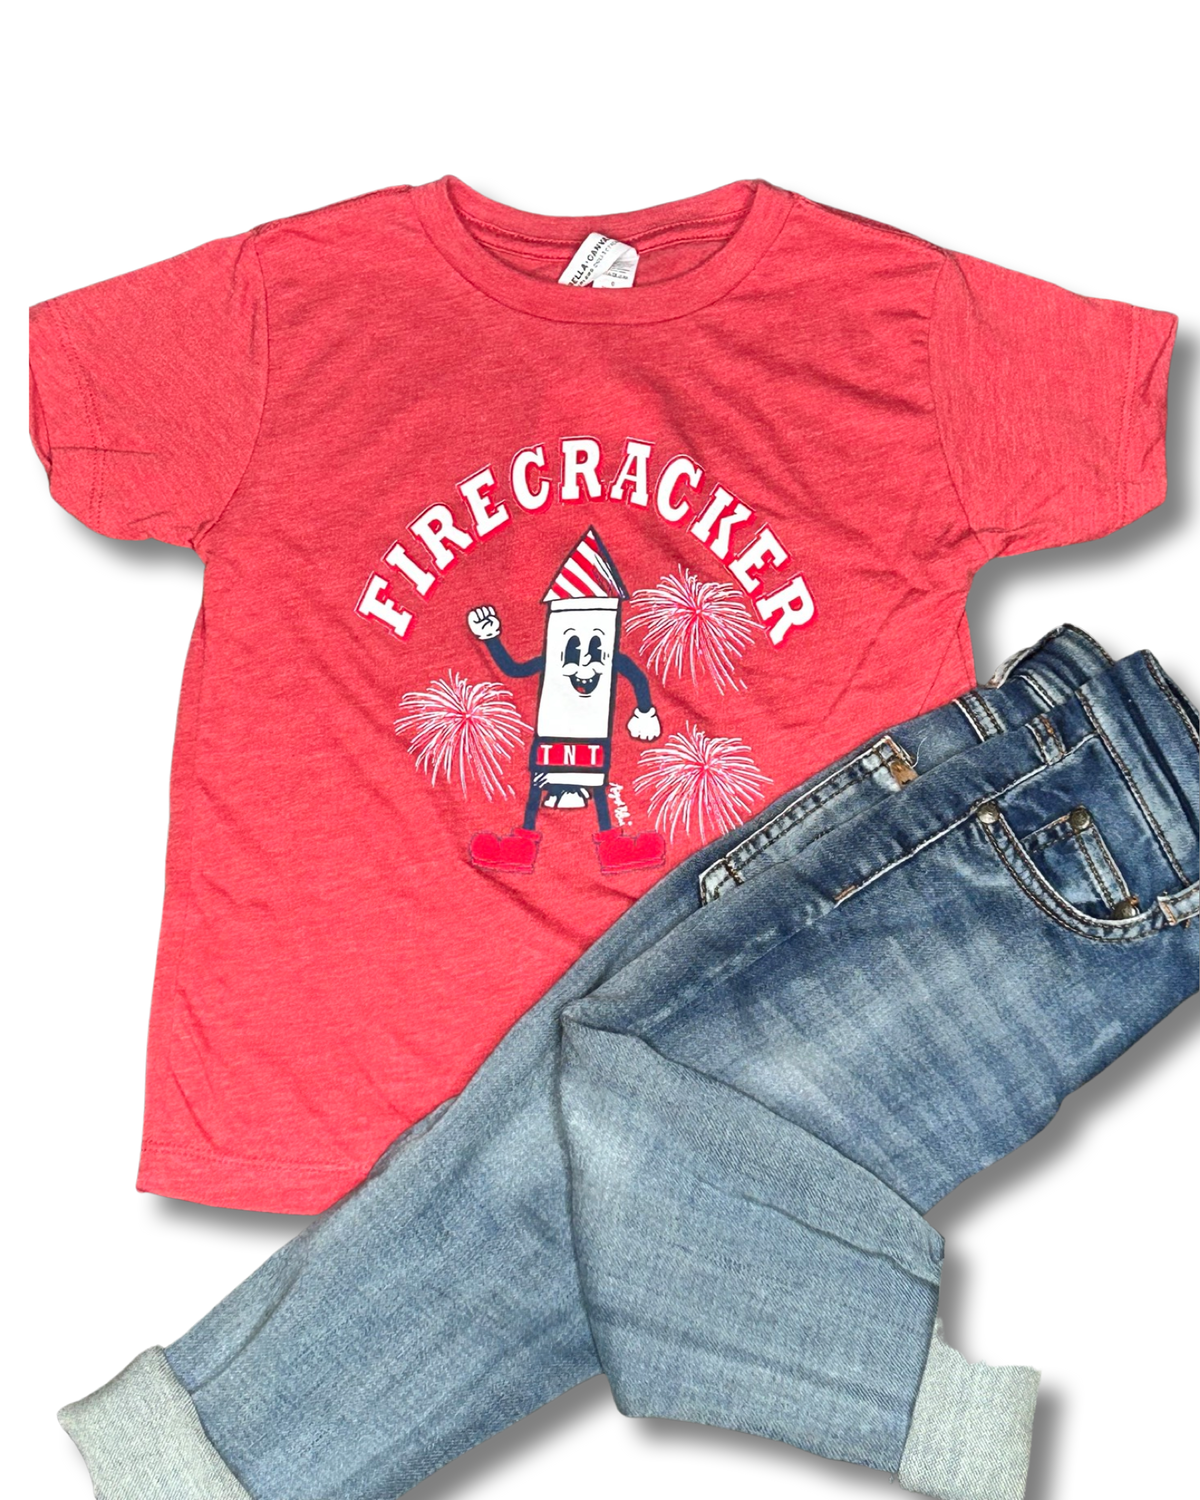 Firecracker written in white over a cartoon firecracker and firecracker explosions on a red crew neck kid tee